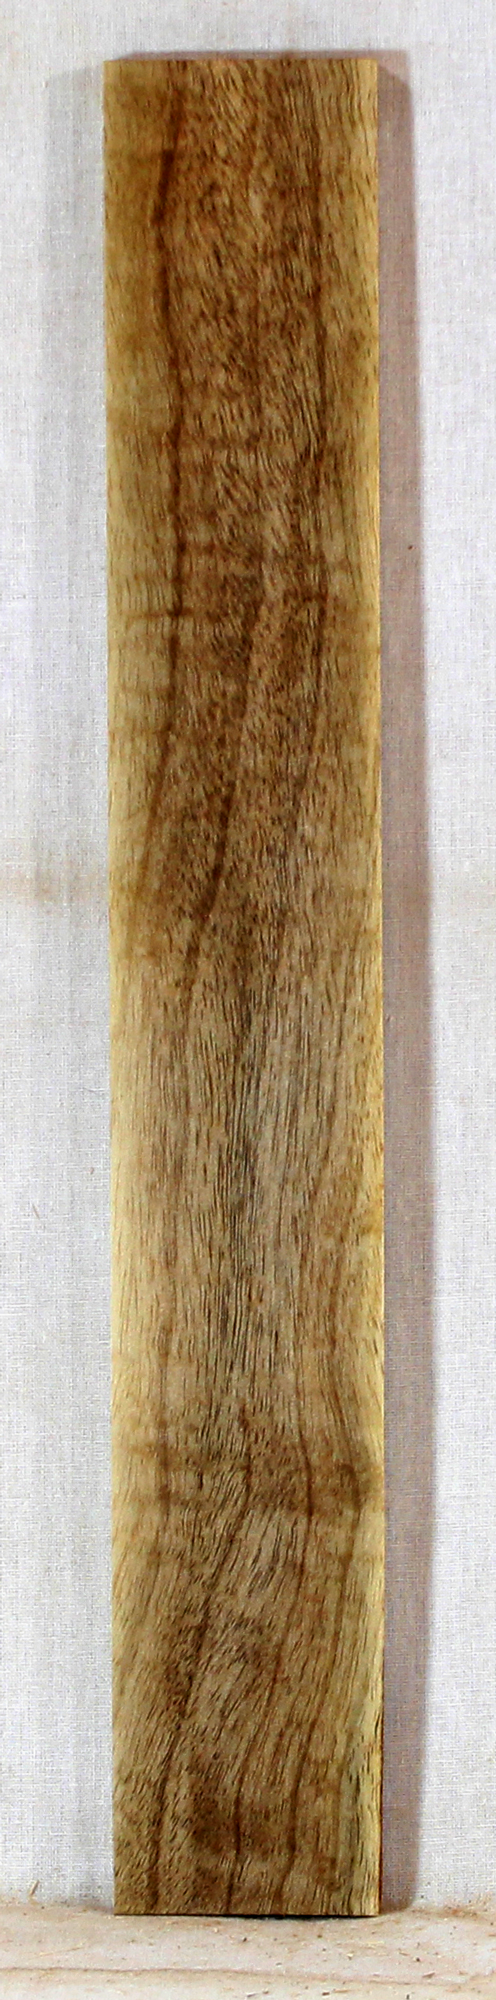 Myrtle Ukulele Fingerboard Stabilized (EG95)